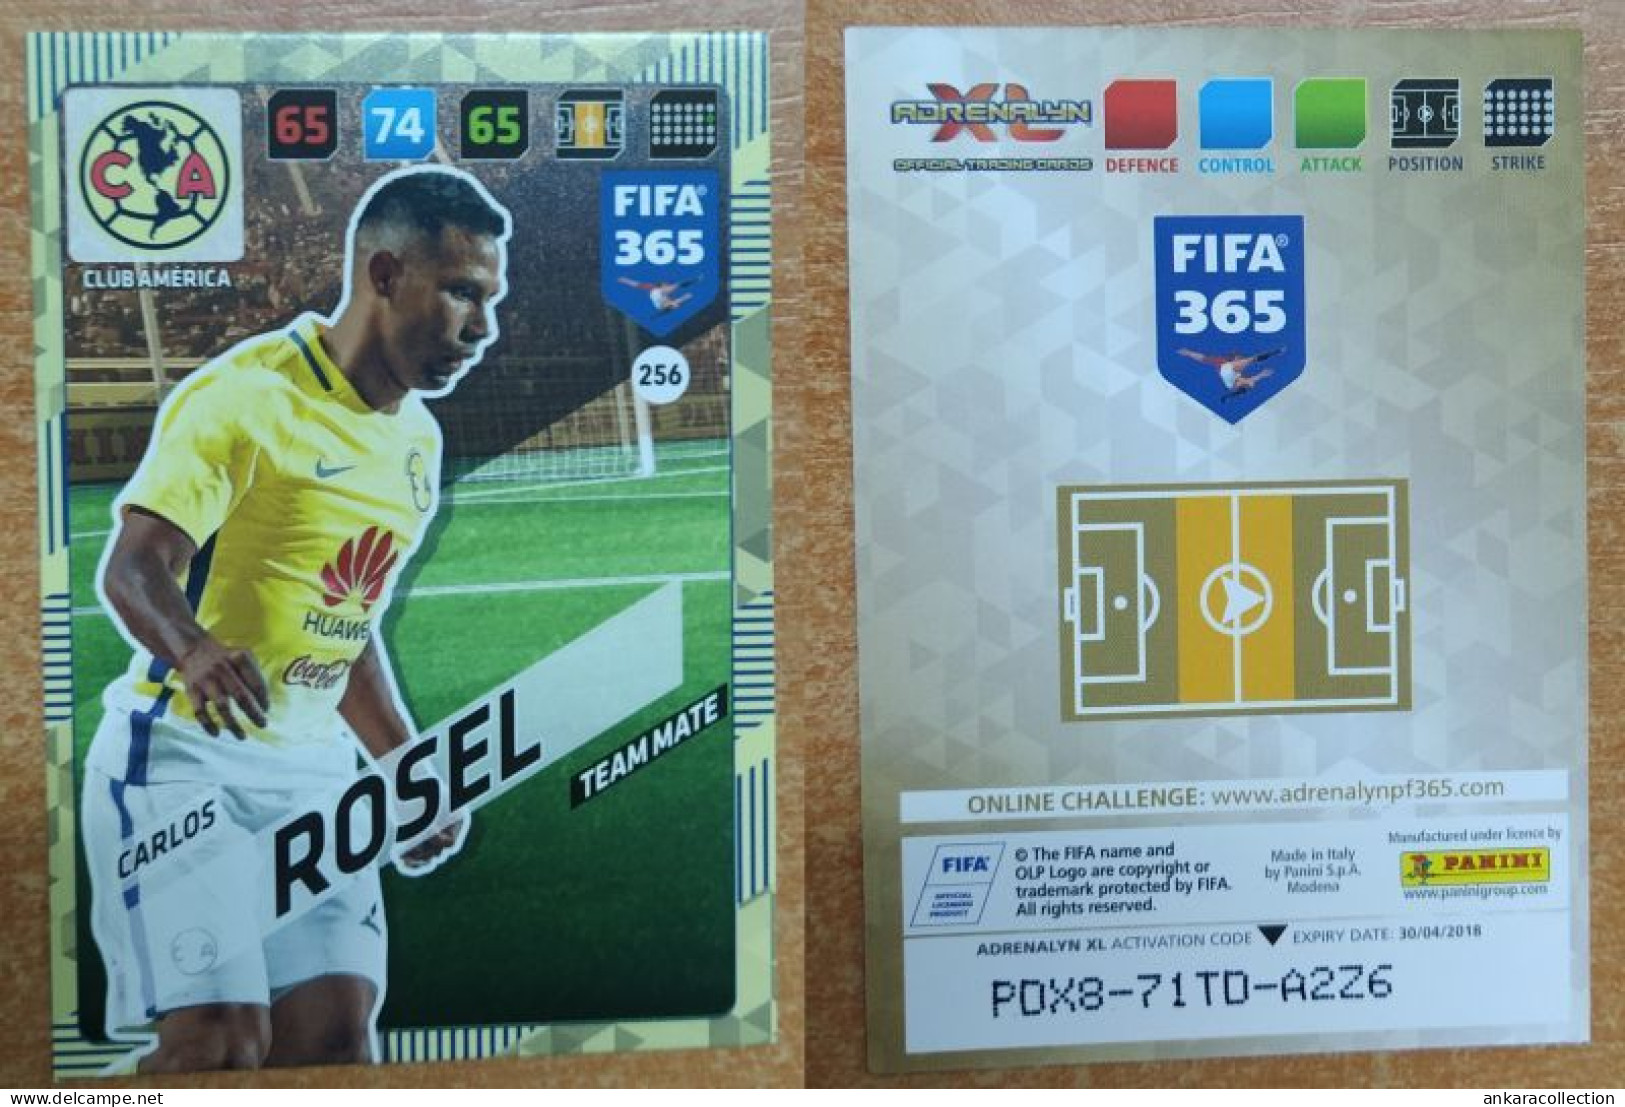 AC - 256 CARLOS ROSEL  CLUB AMERICA  TEAM MATE  FIFA 365 PANINI 2018 ADRENALYN TRADING CARD - Tarjetas